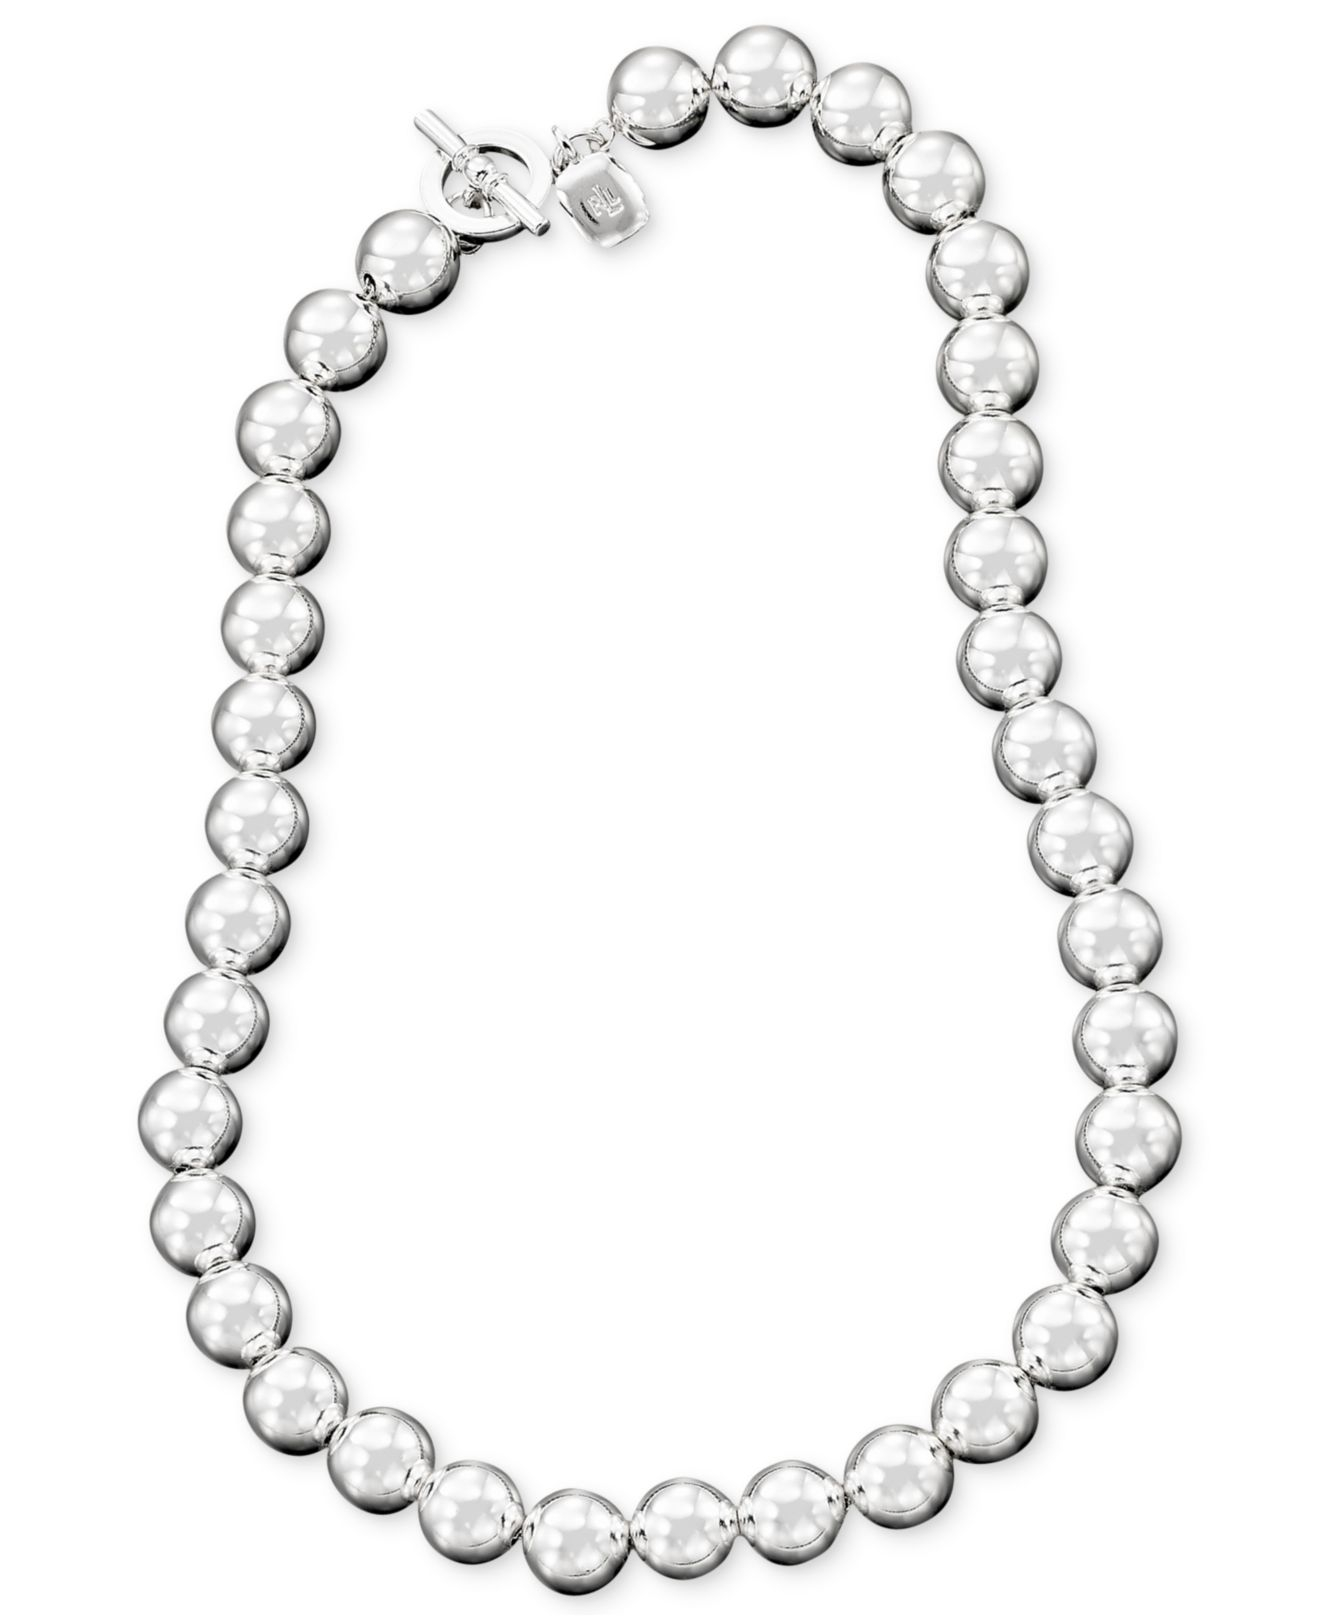 Silver-Tone Metal Bead Necklace 